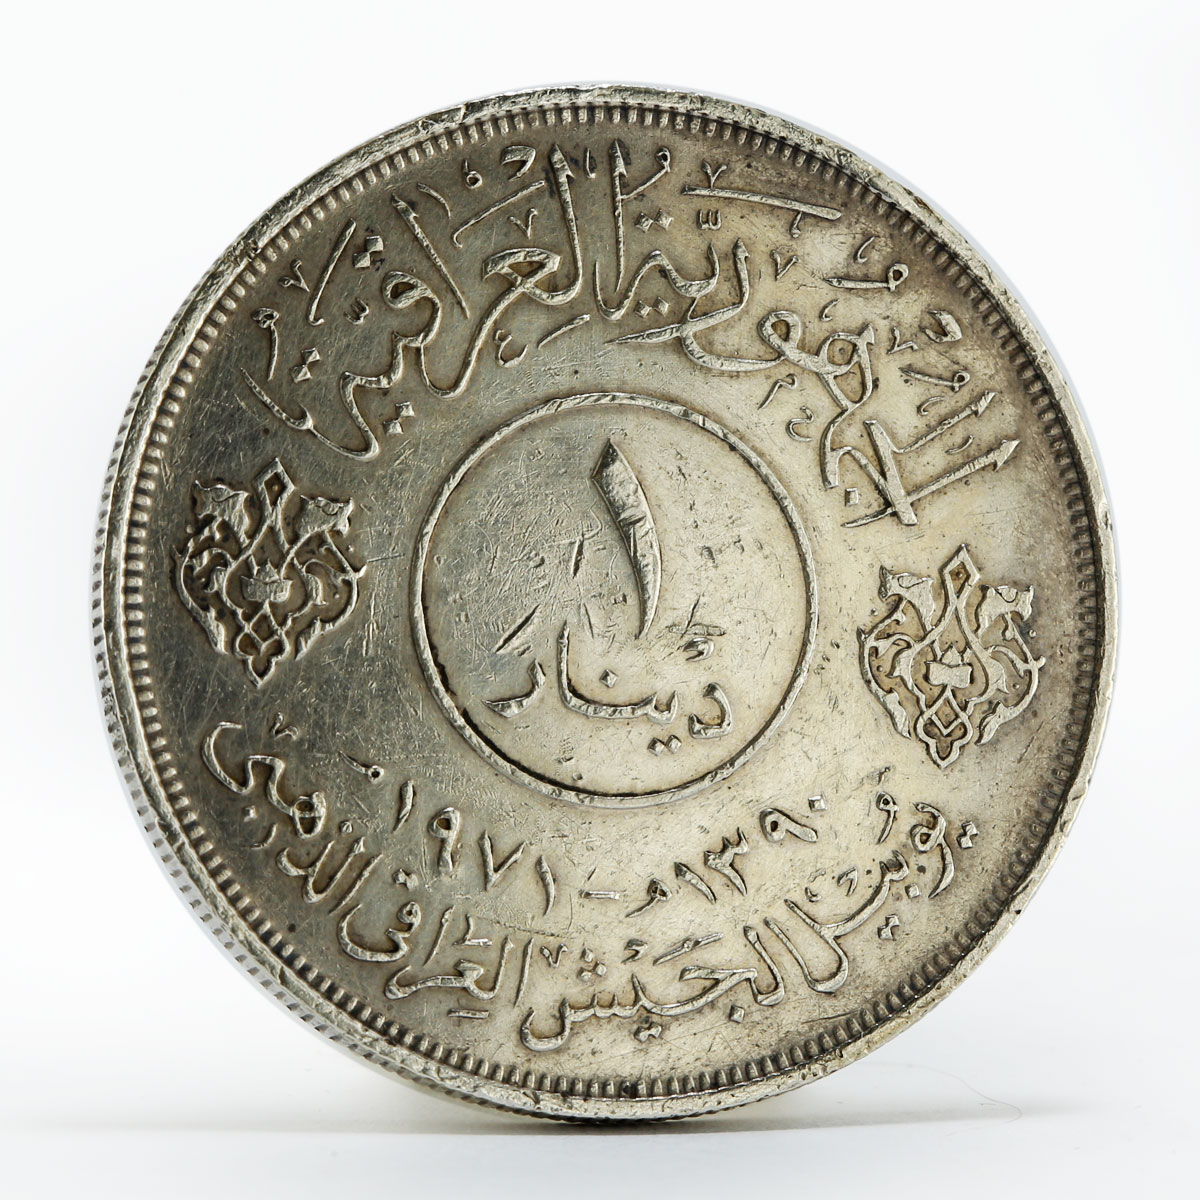 Iraq 1 dinar 50th Anniversary of Army silver coin 1971